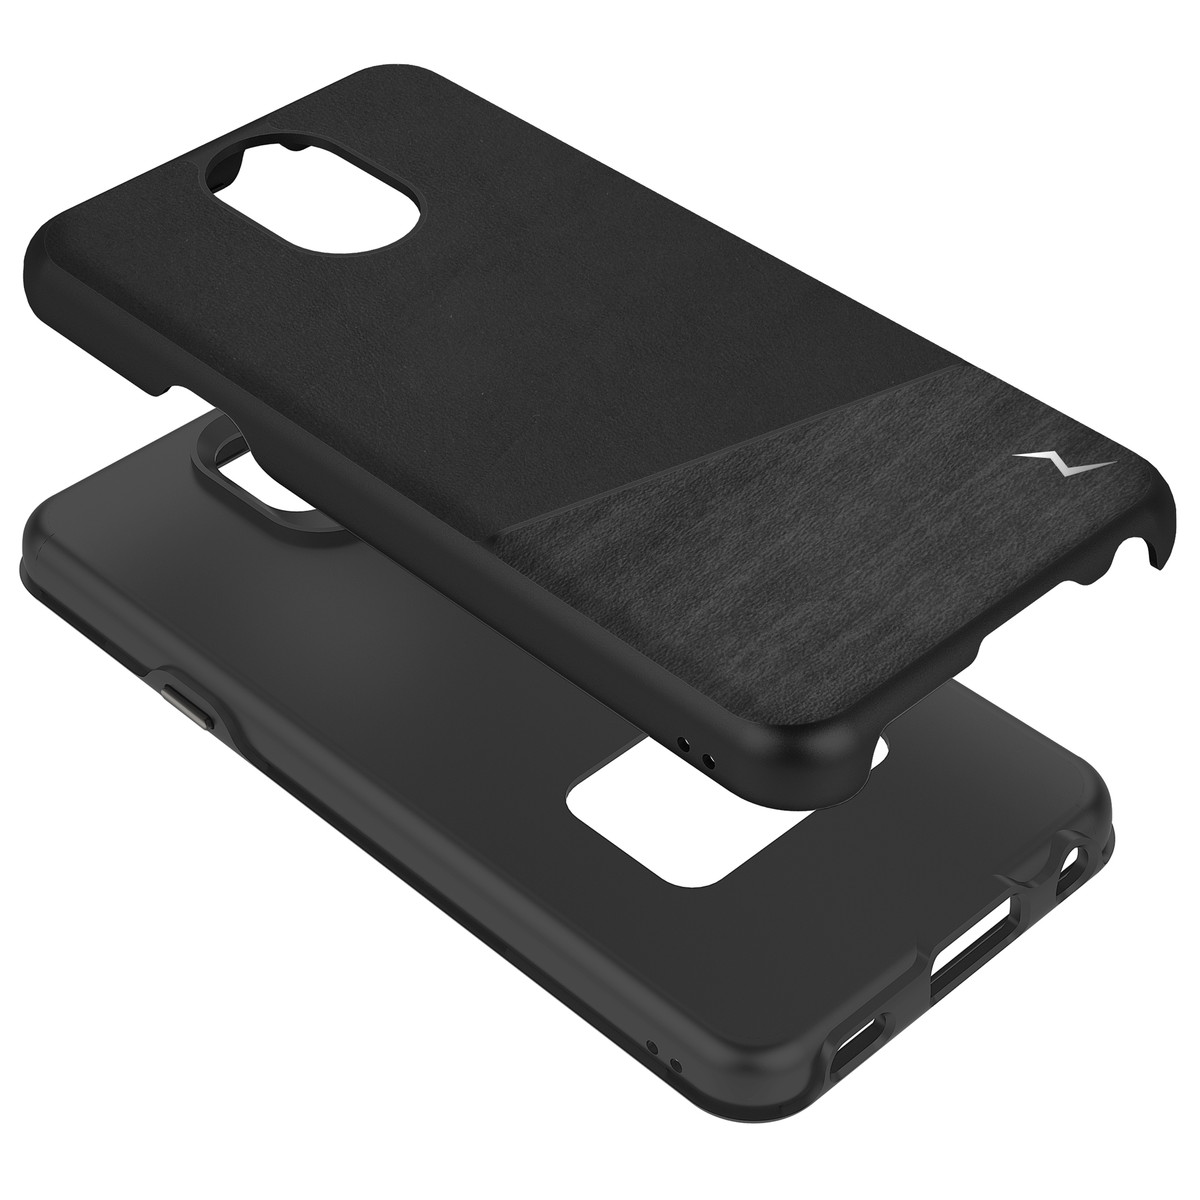 LG Escape Plus - Zizo Division Case w/ Dual Layering & Shockproof Protection - BLACK & GRAY (4512)